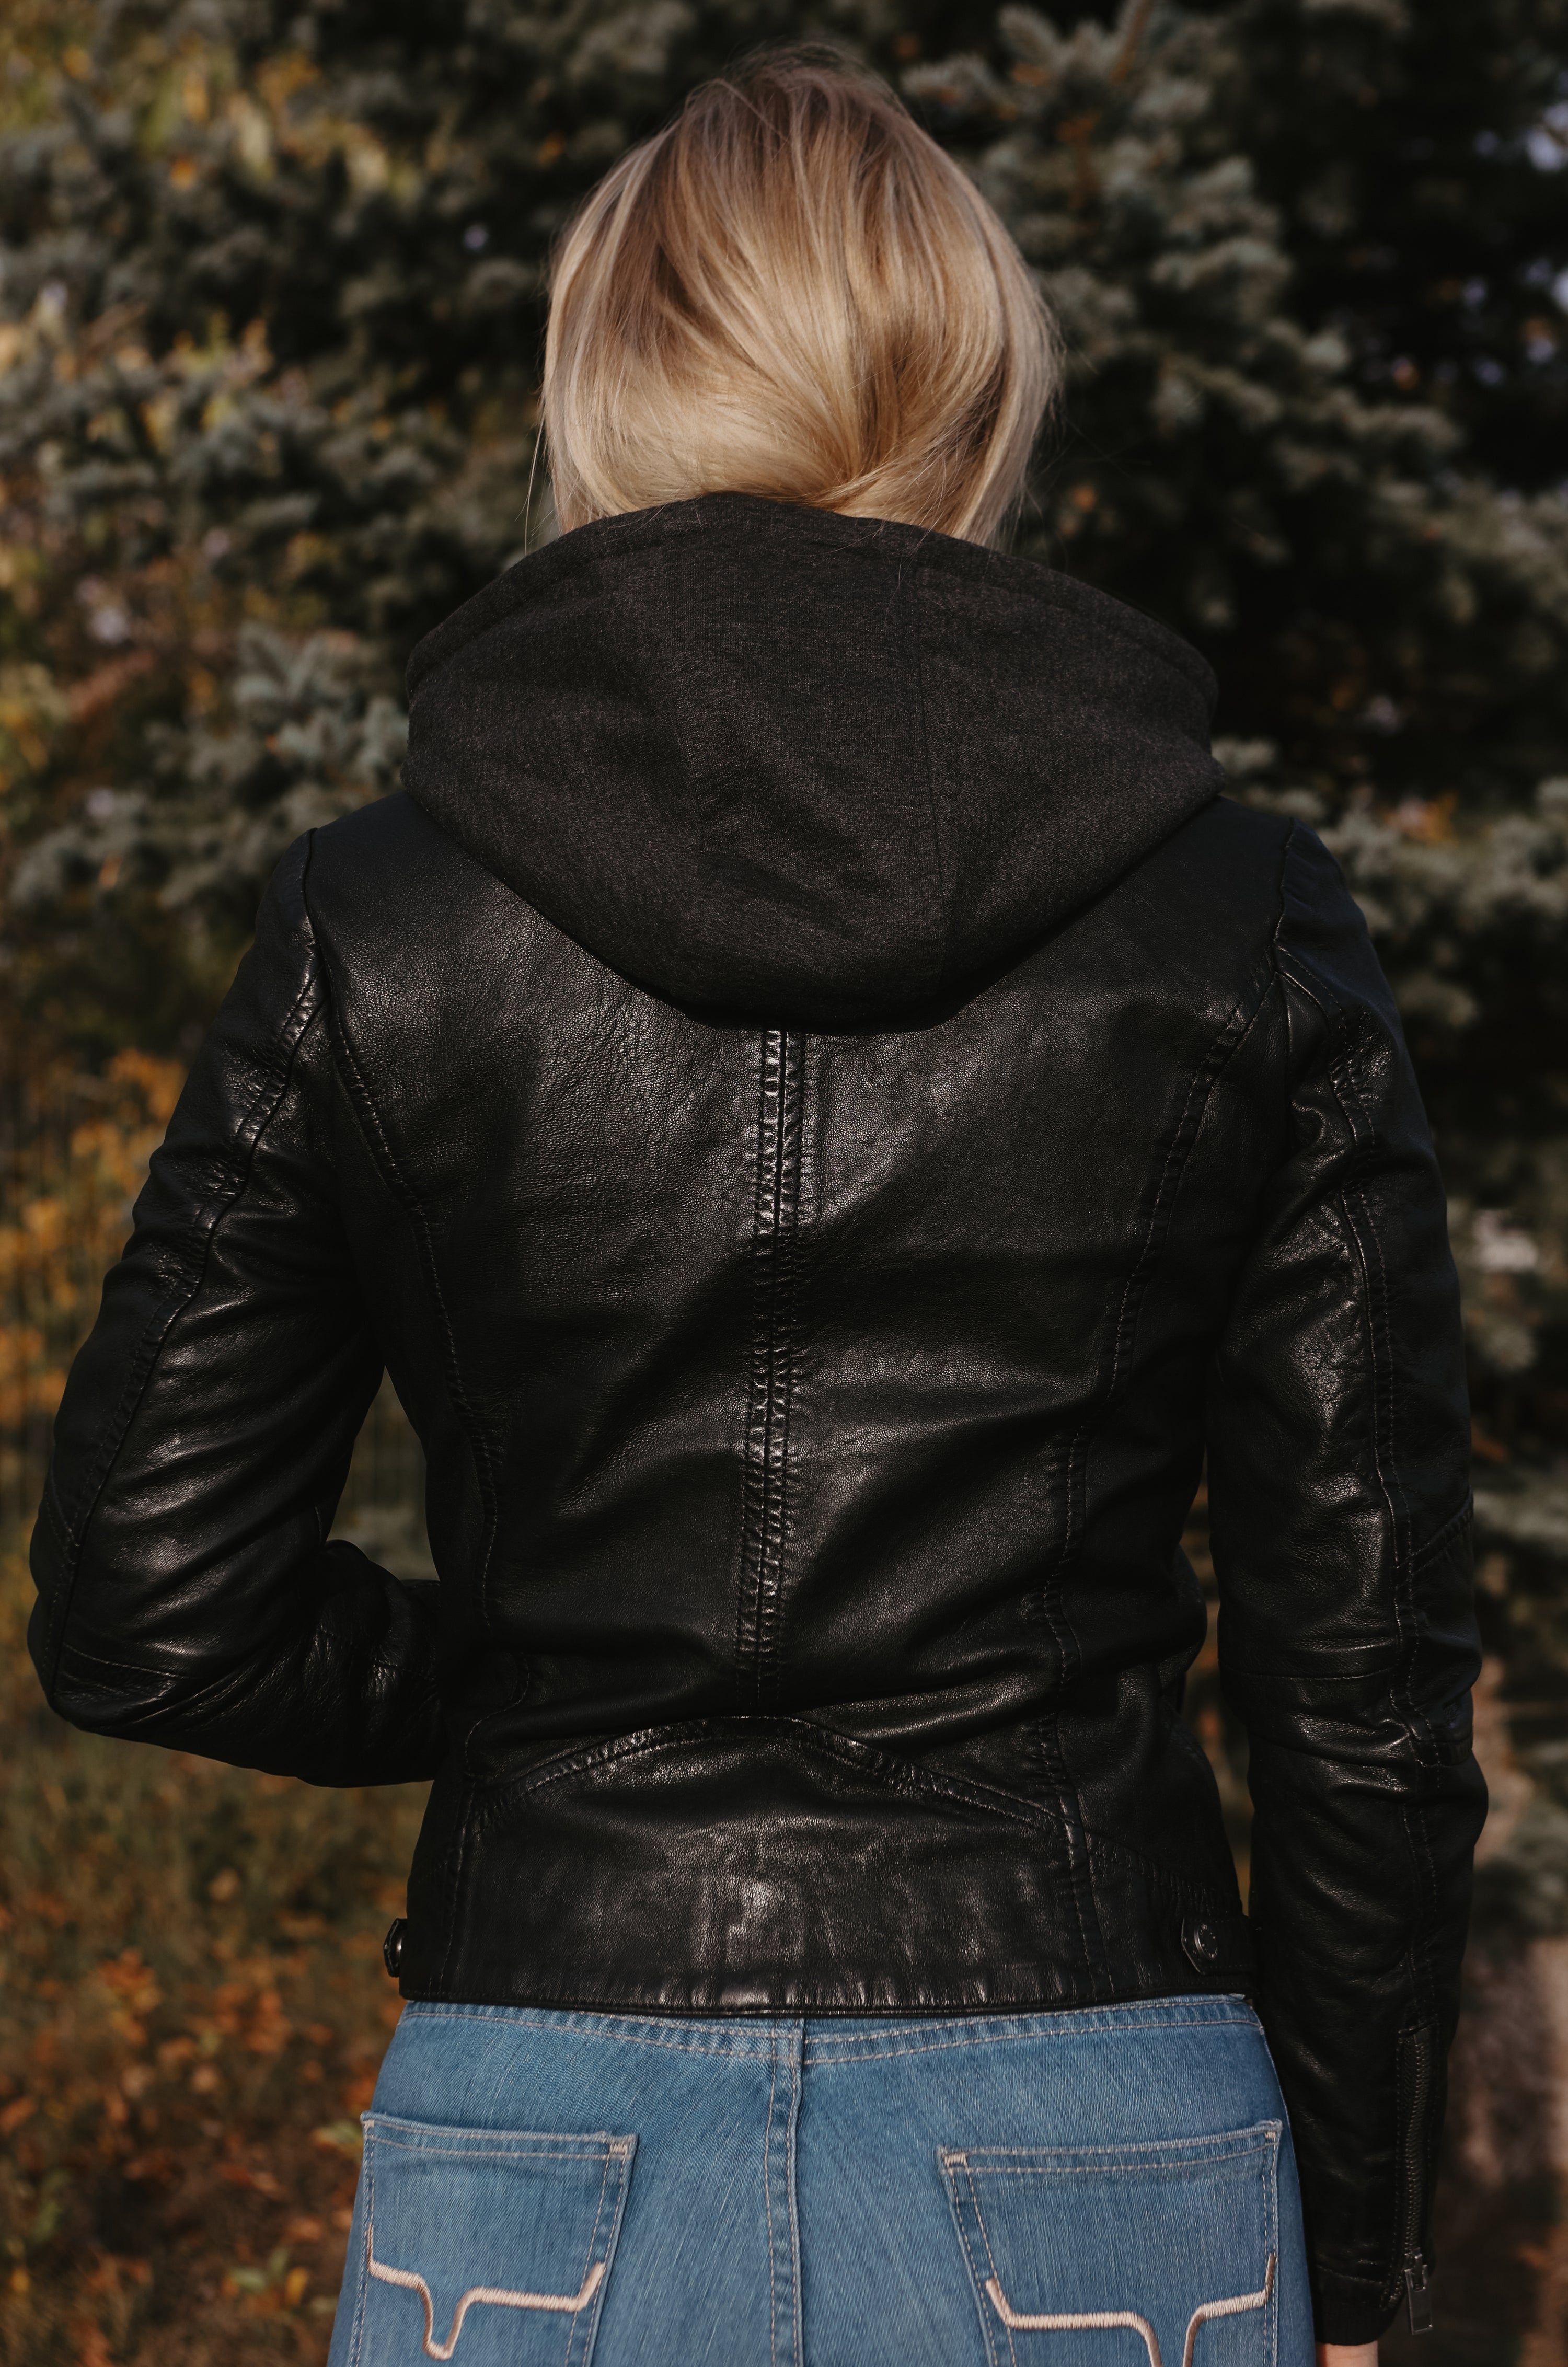 Mauritius - Women's Yoa Black Leather Jacket w/ Hood